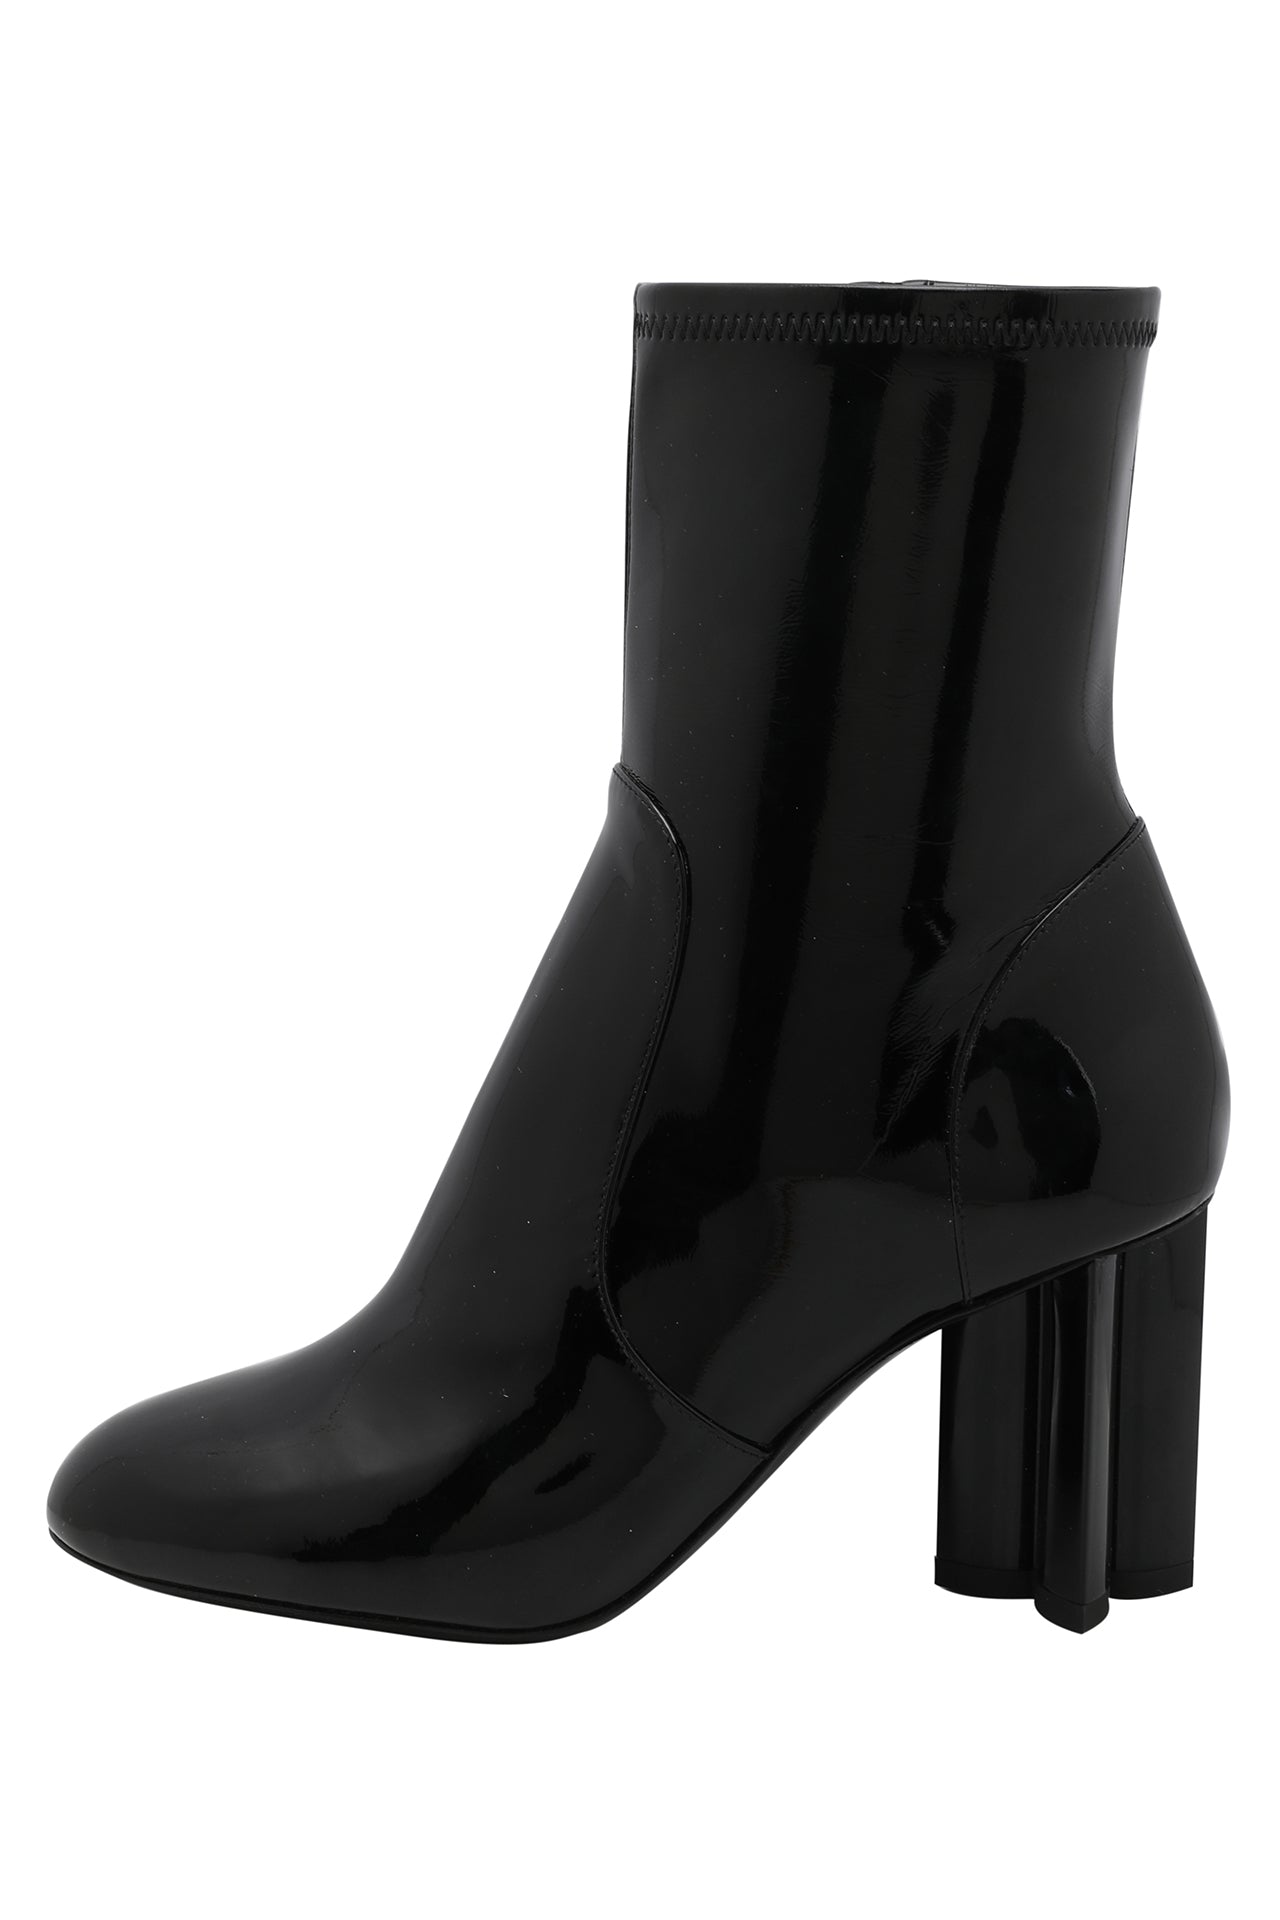 Louis Vuitton Black Patent Leather Silhouette Ankle Boots EU 35